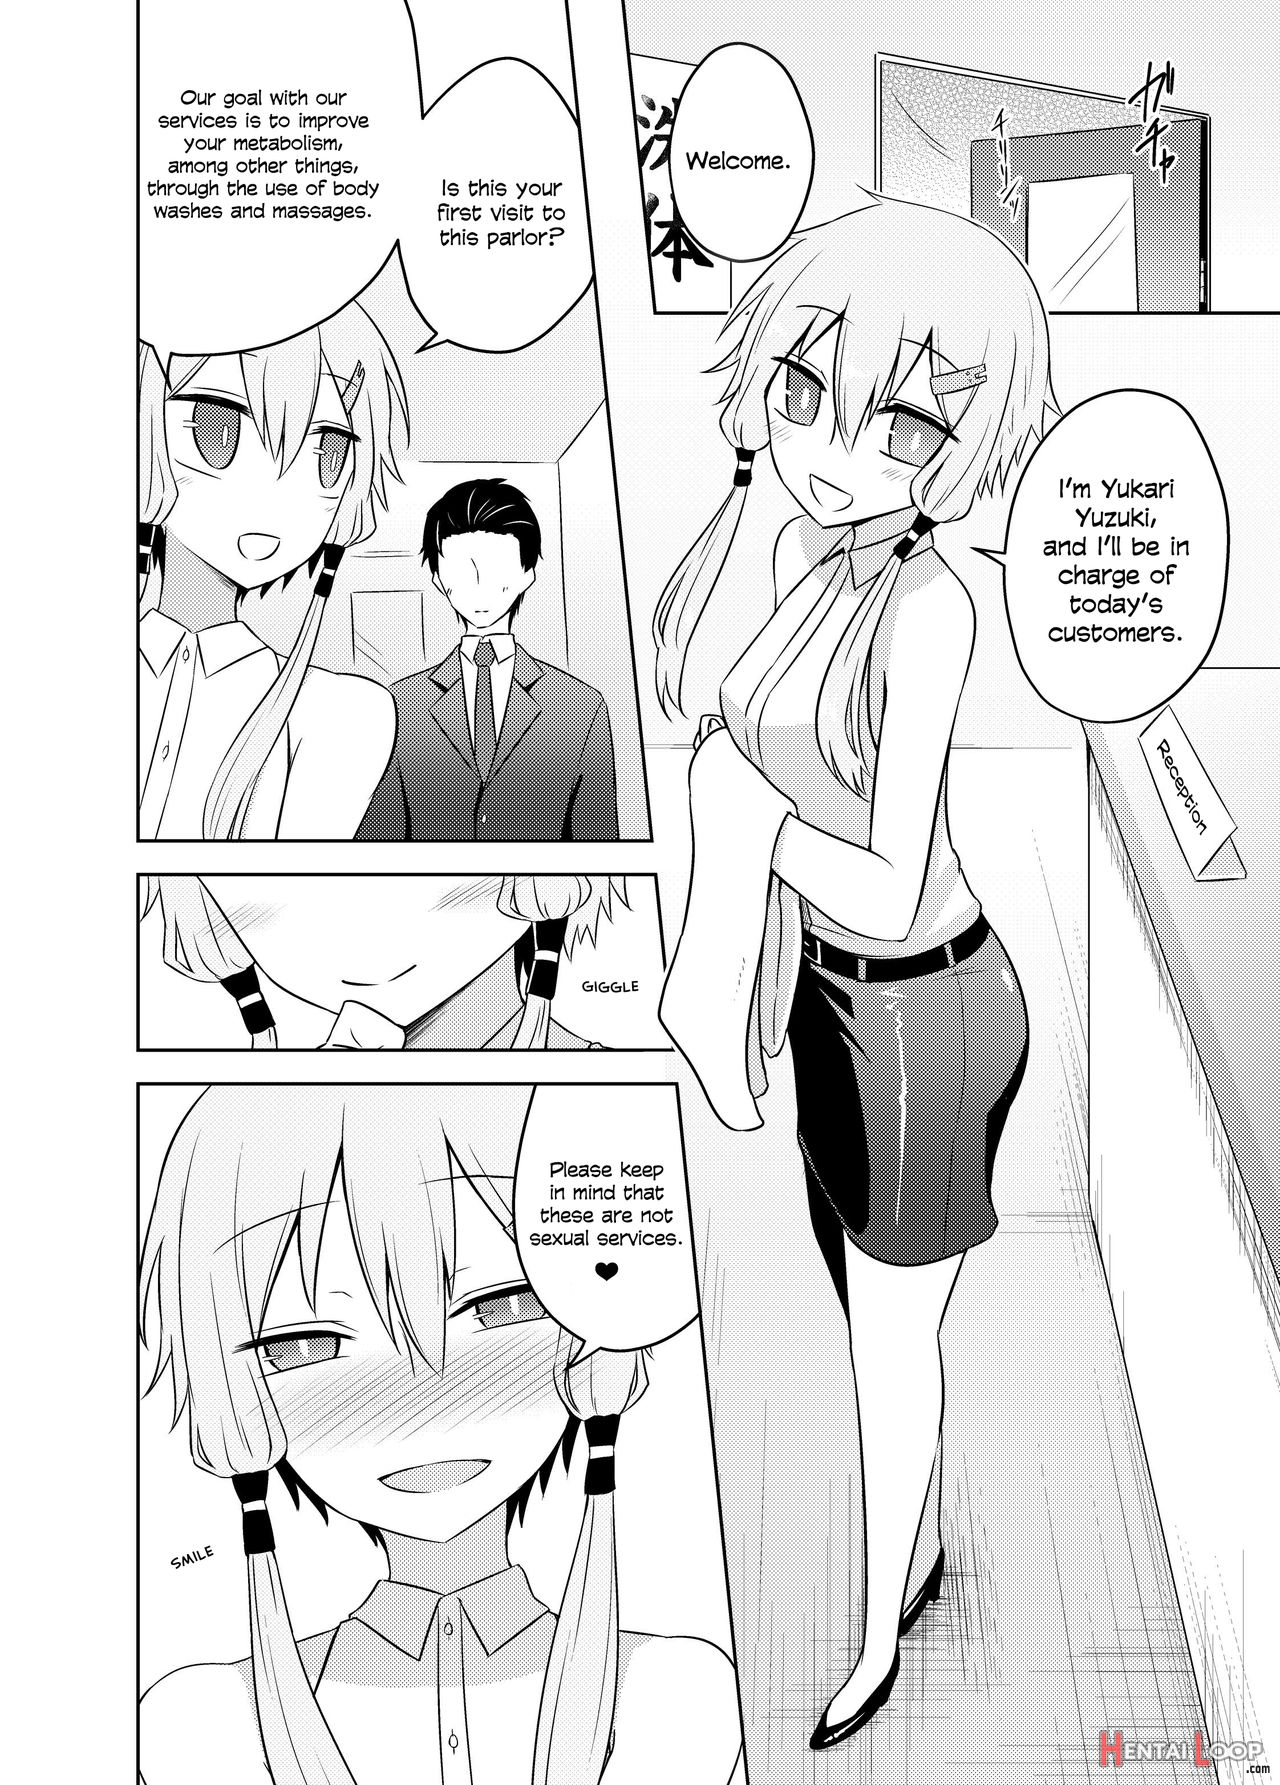 Yukari-san Seems To Be Continuing Her Body Washing Service! page 4